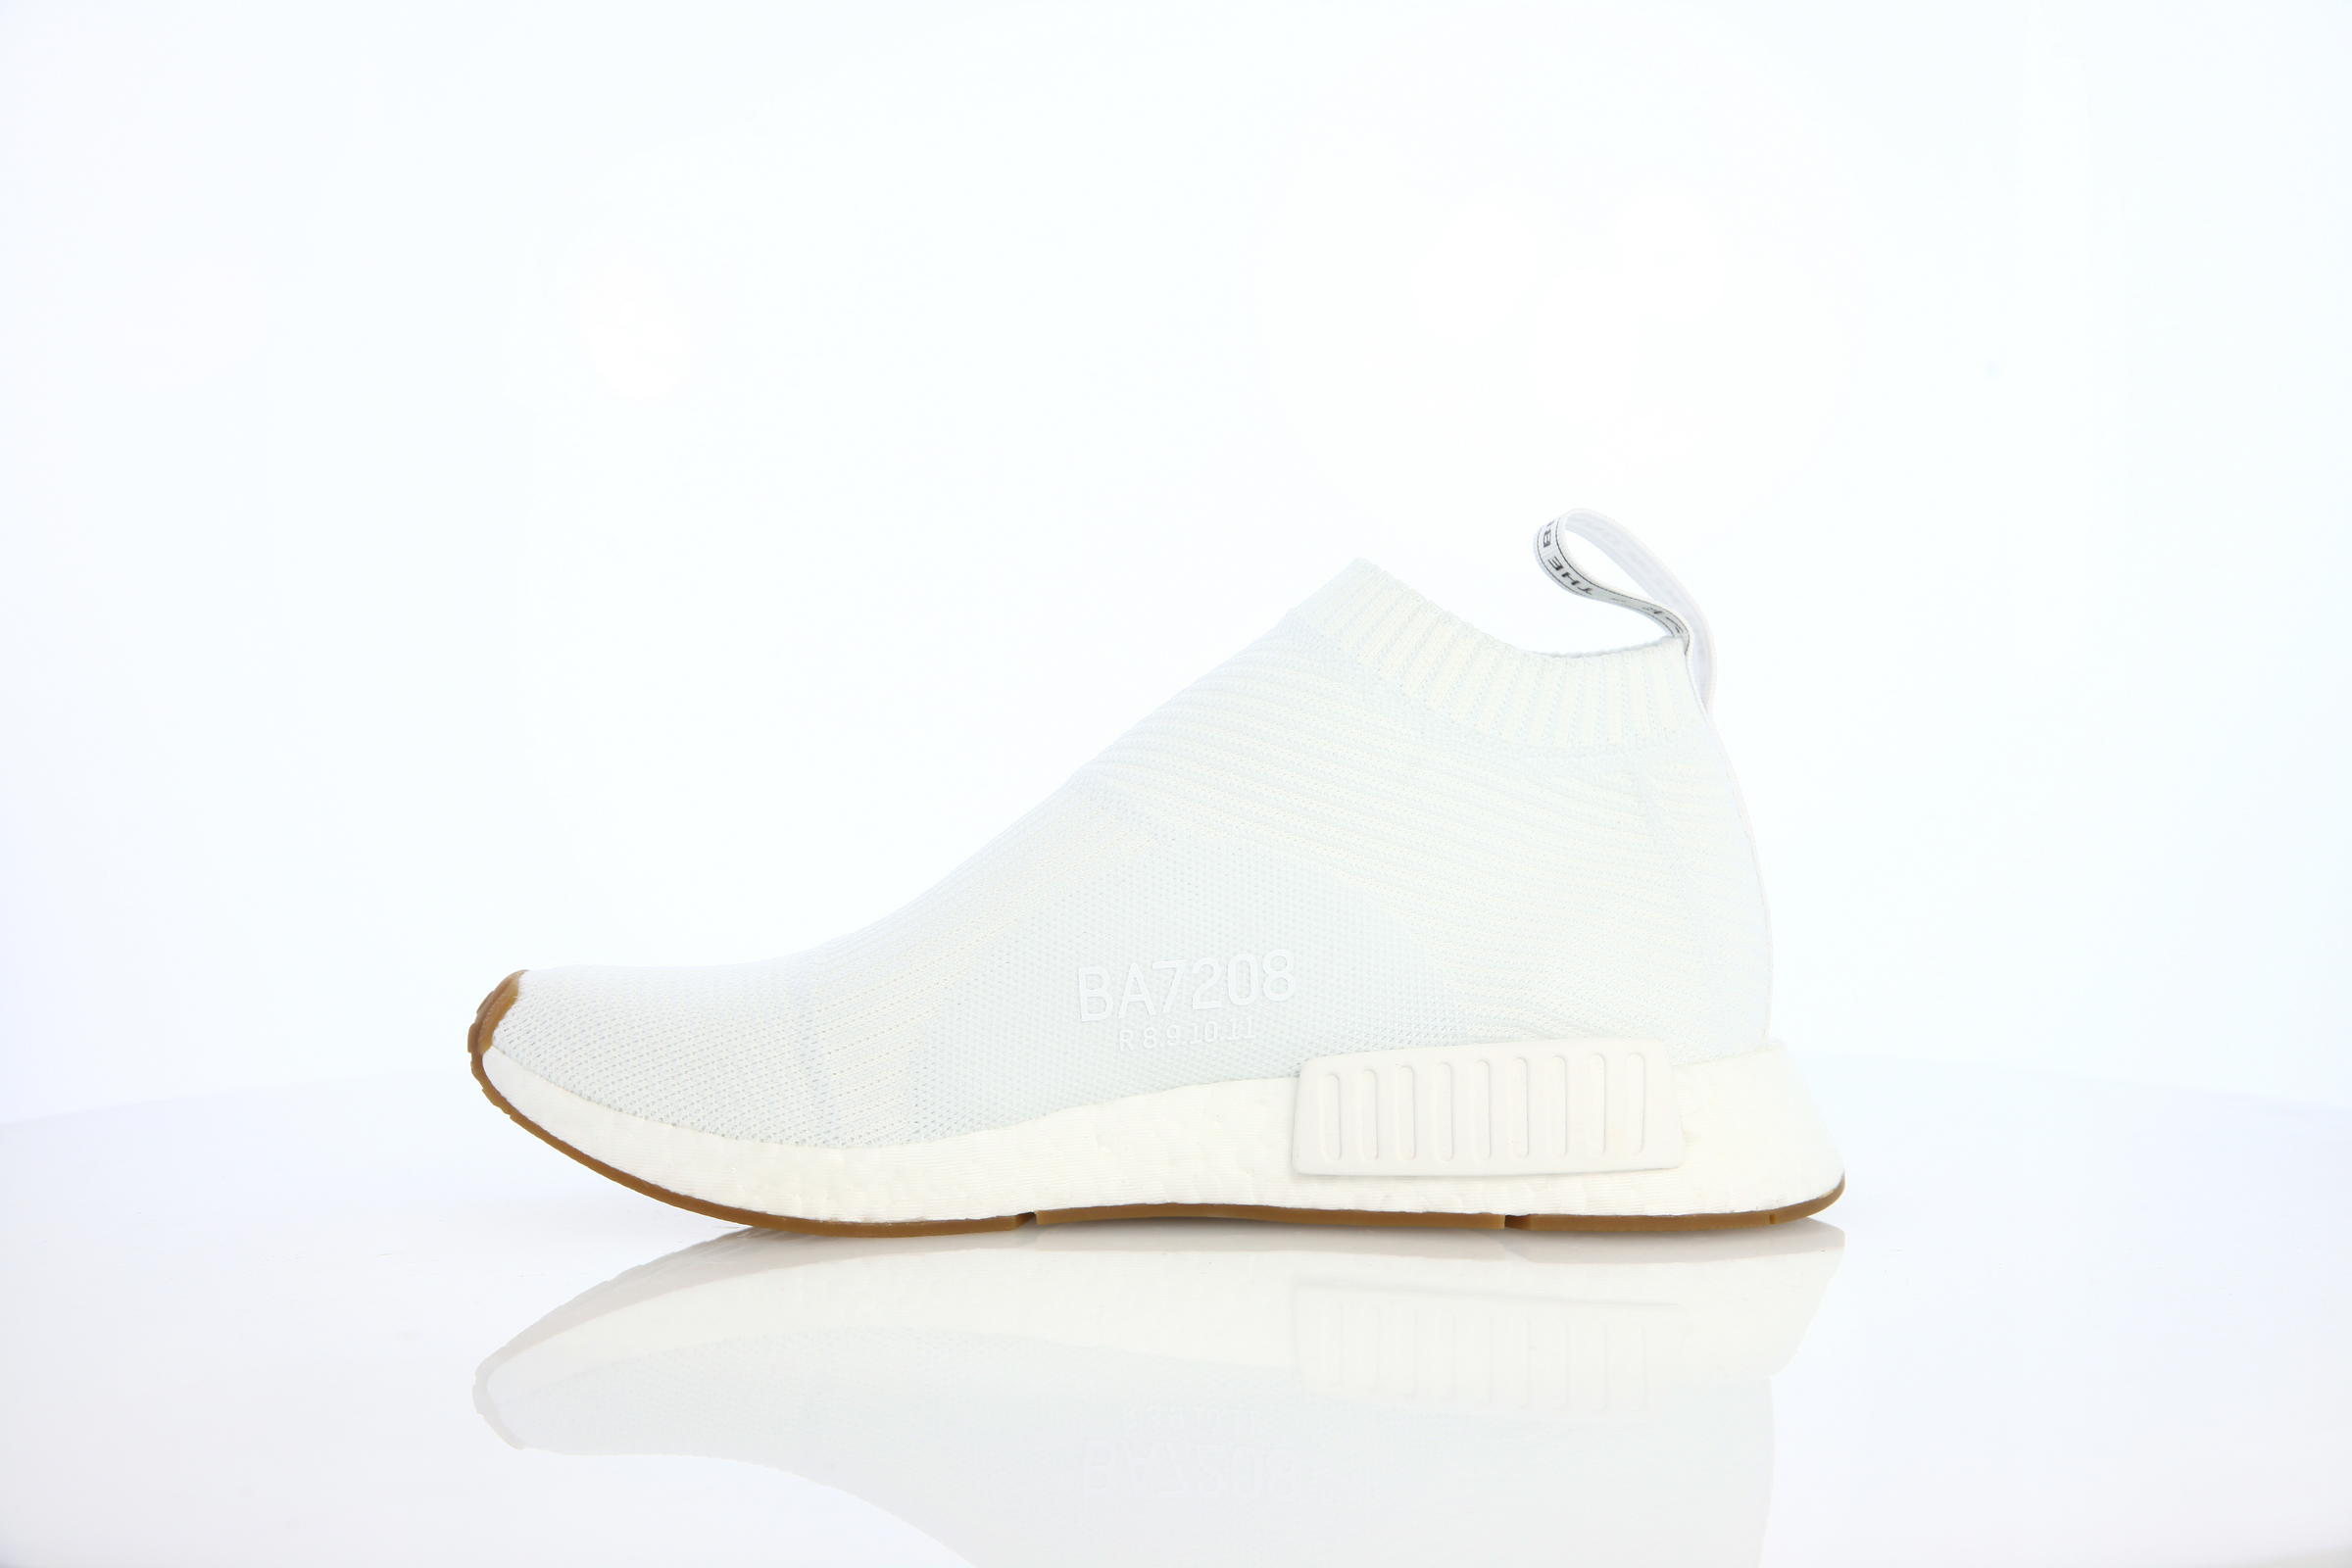 adidas Originals Nmd cs1 City Sock Boost Primeknit "White Gum"